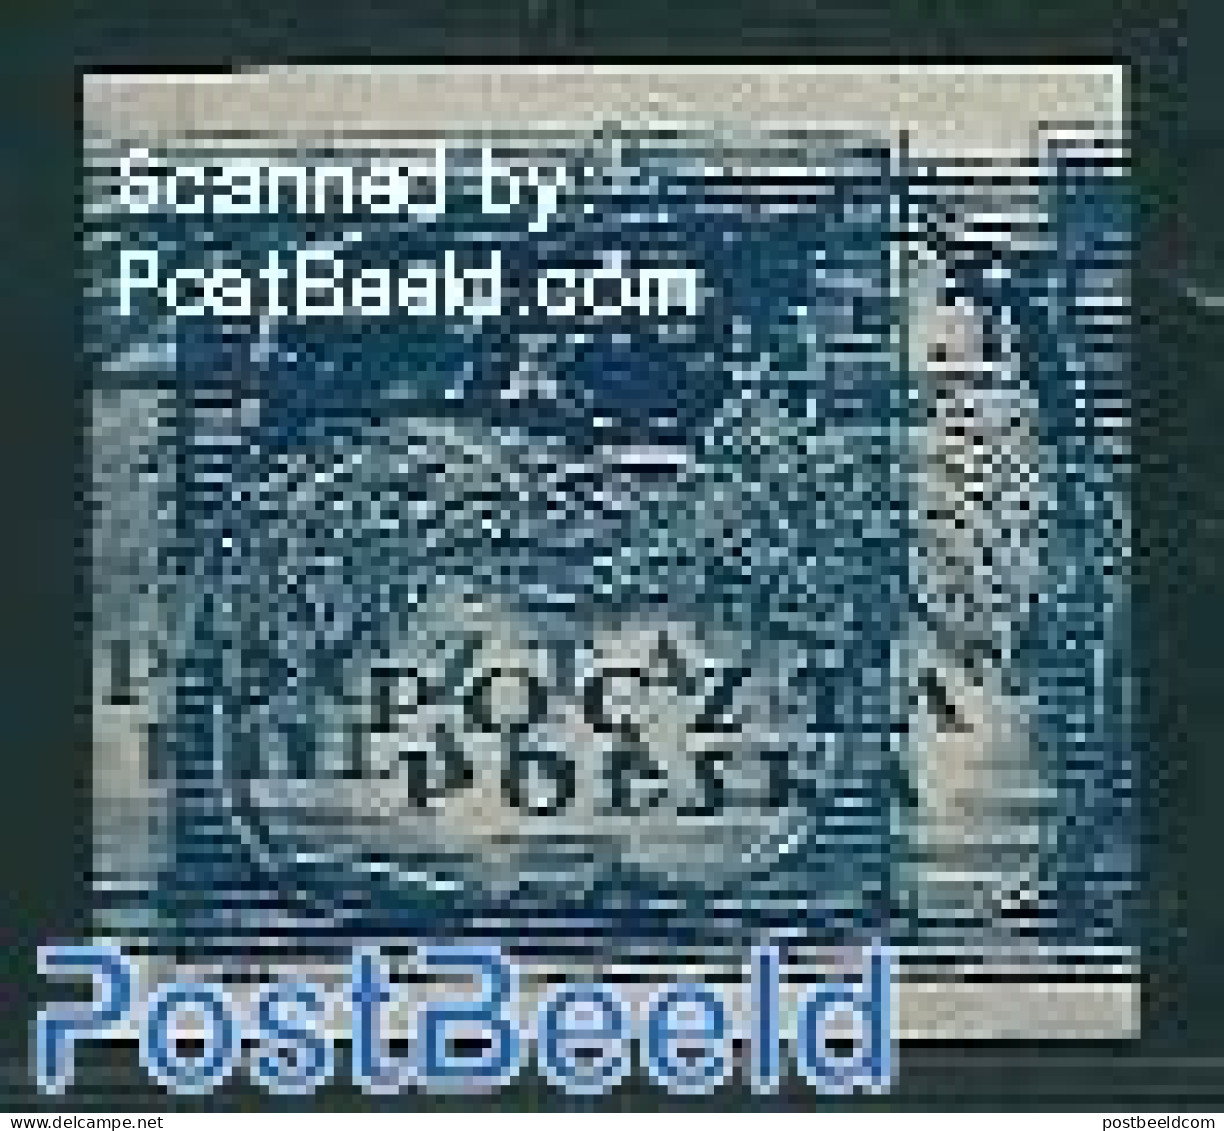 Poland 1919 2Kr, Blue, Double Print, Mint Nh, Mint NH - Neufs